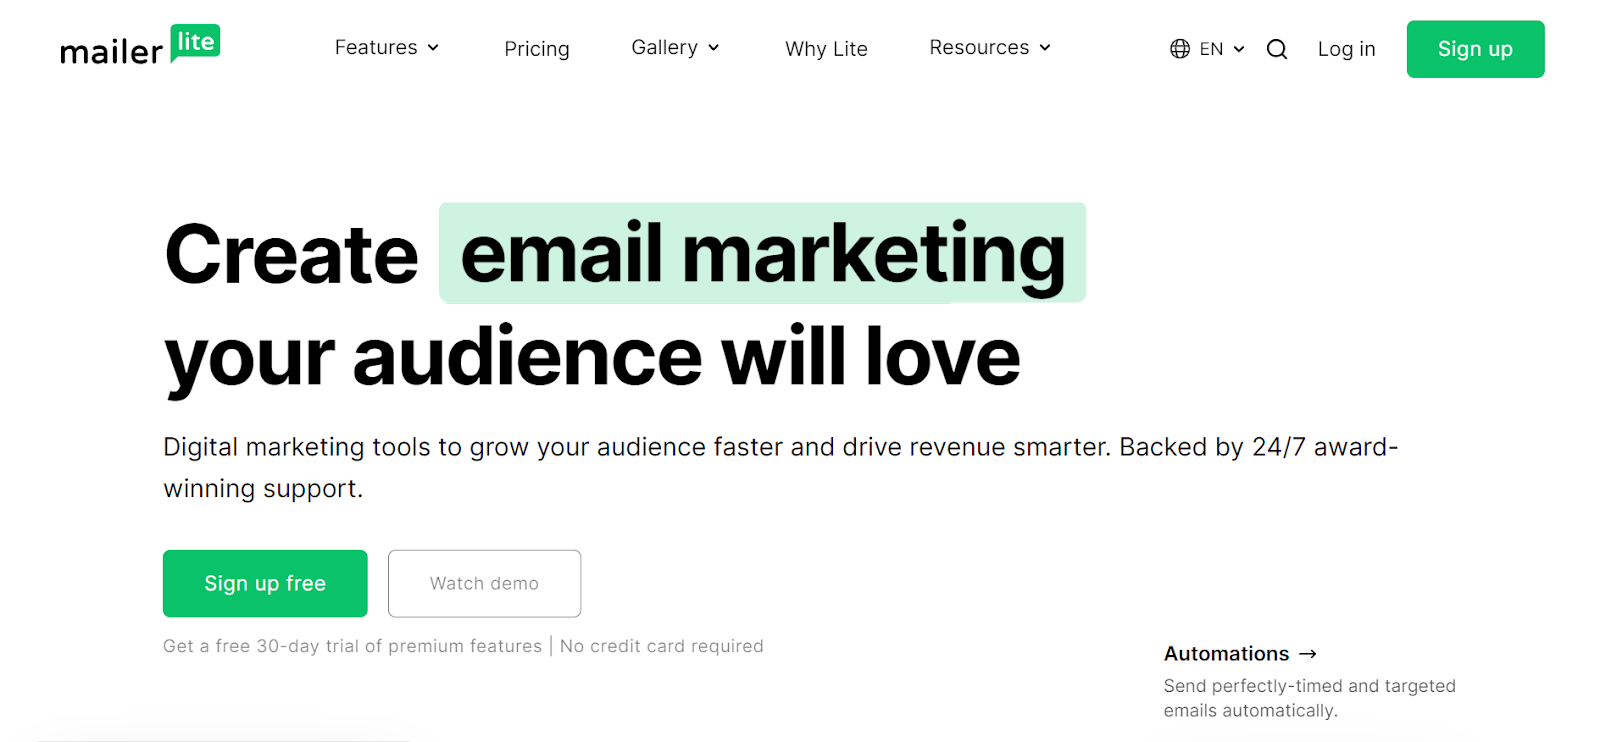 Mailerlite automates email marketing